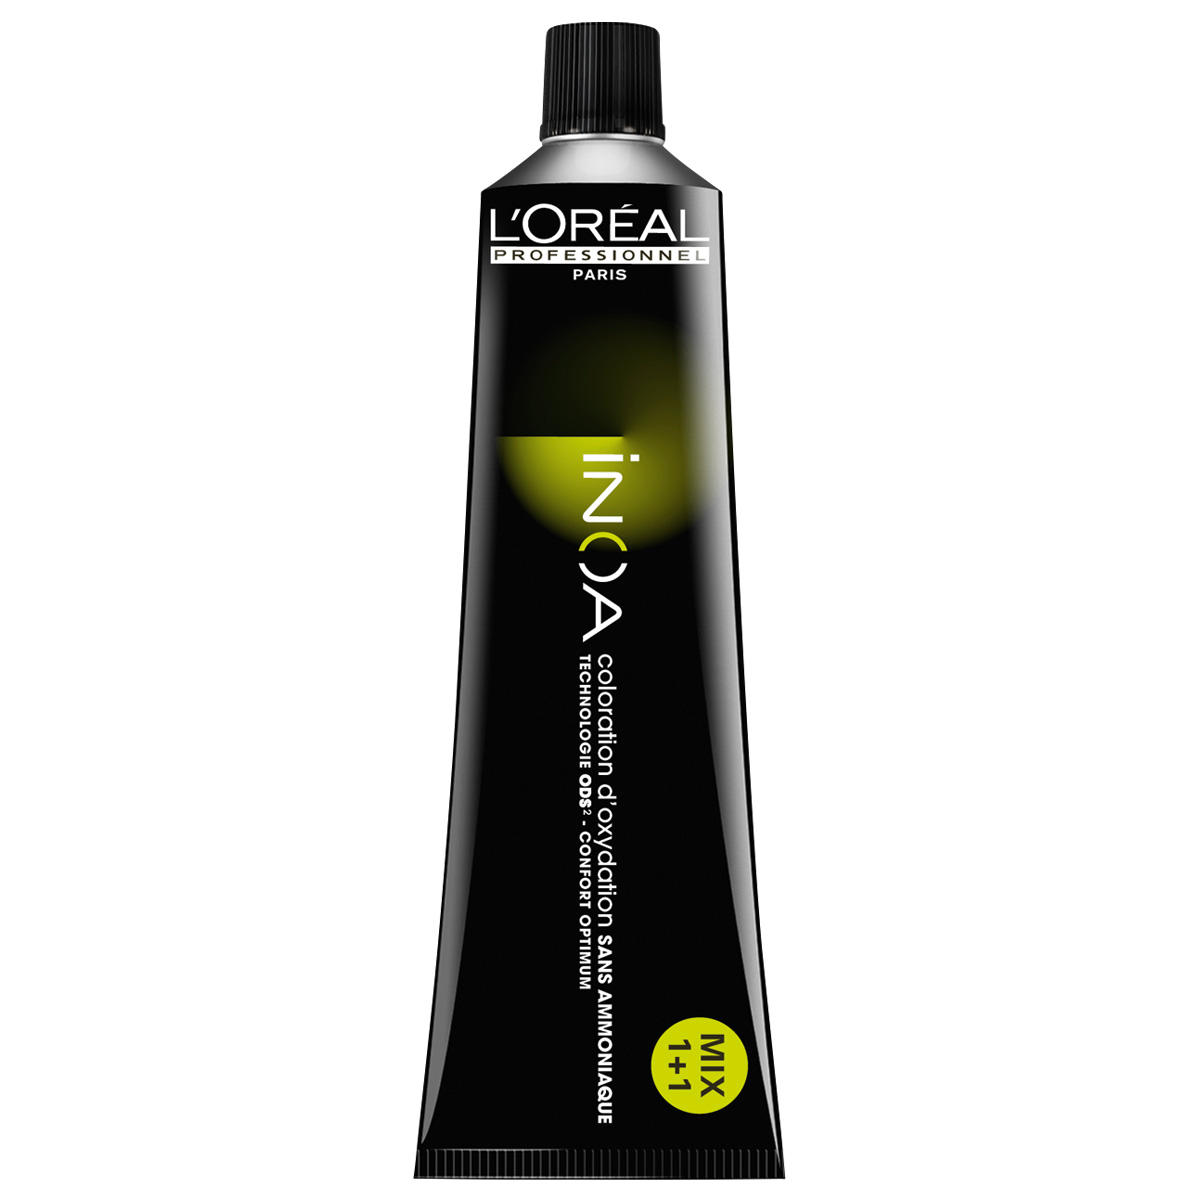 L'Oréal Professionnel Paris Coloration 7.4 Rame biondo medio, tubo 60 ml